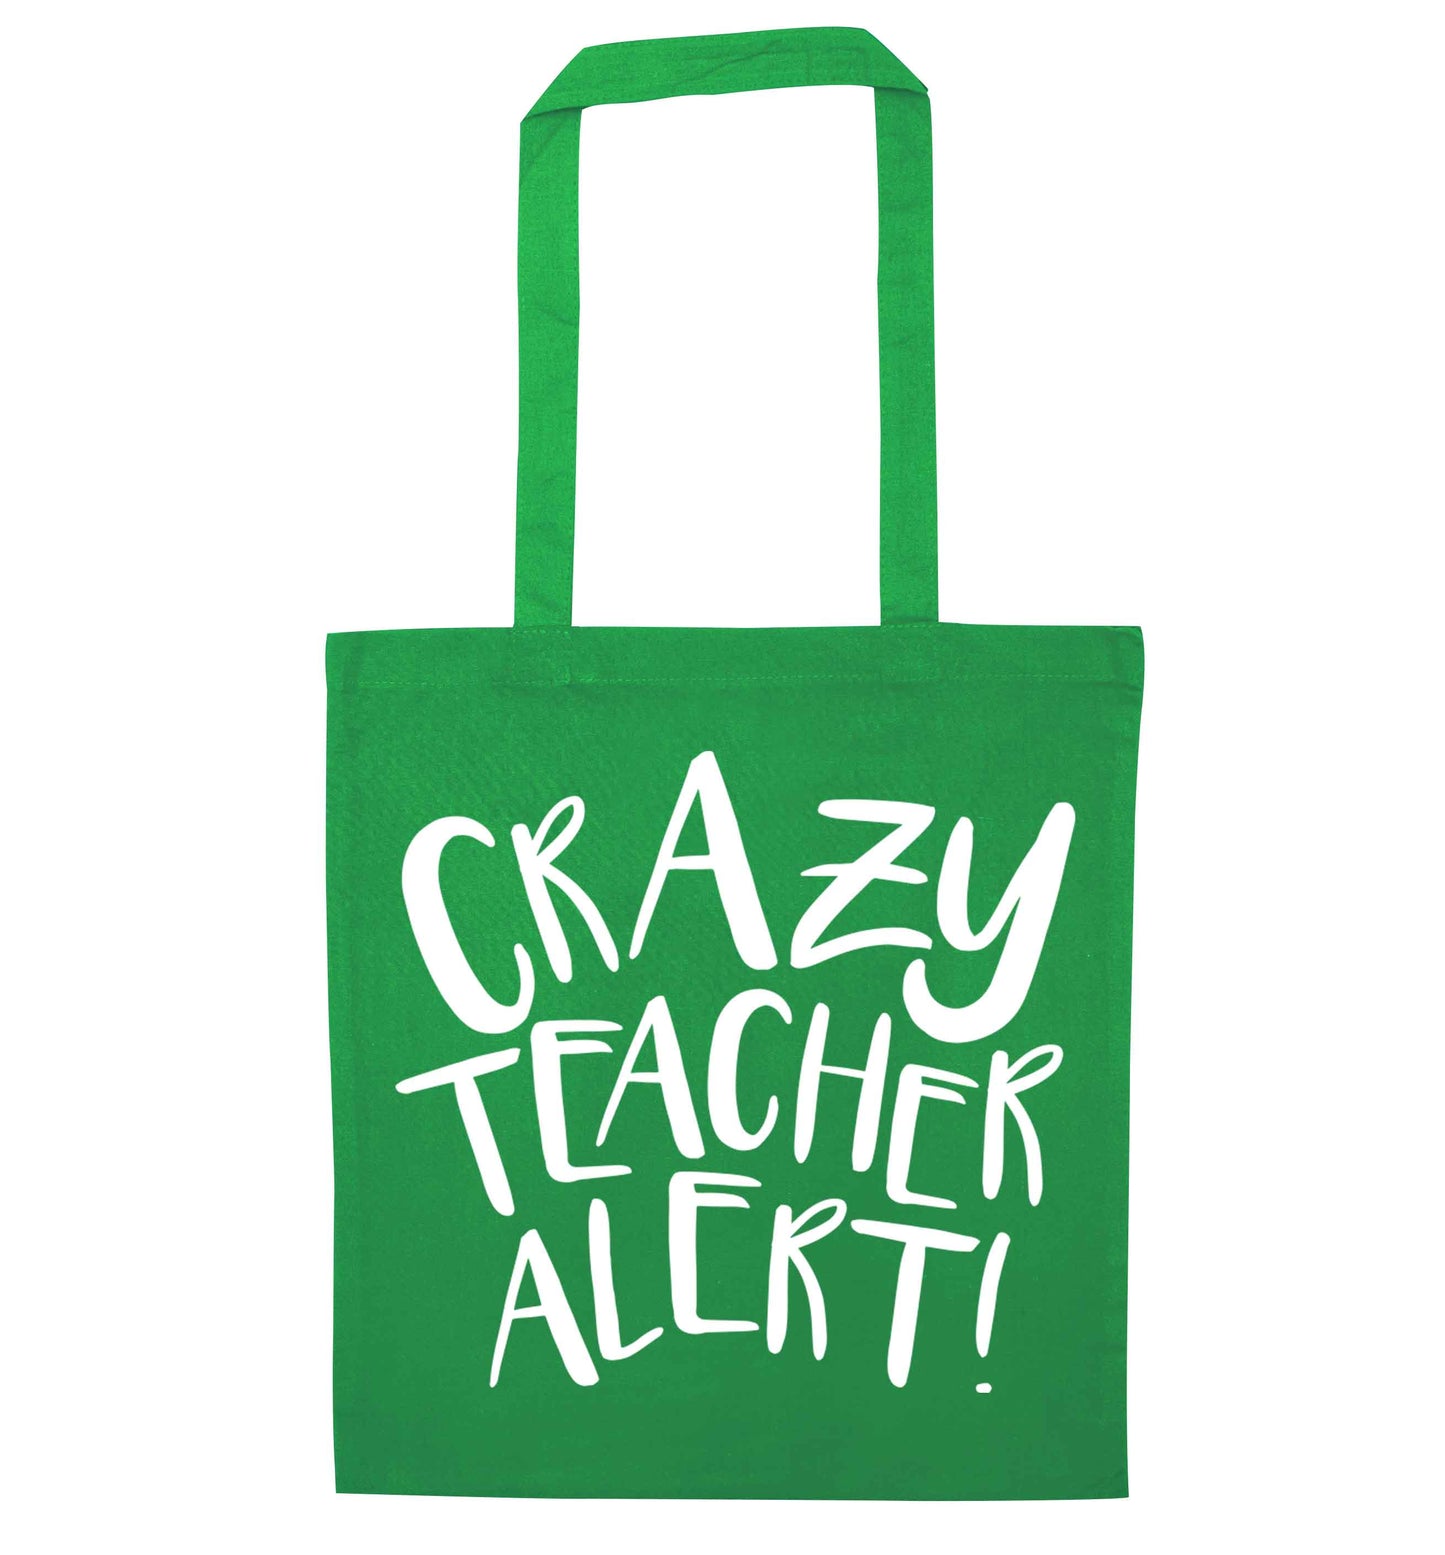 Crazy teacher alert green tote bag